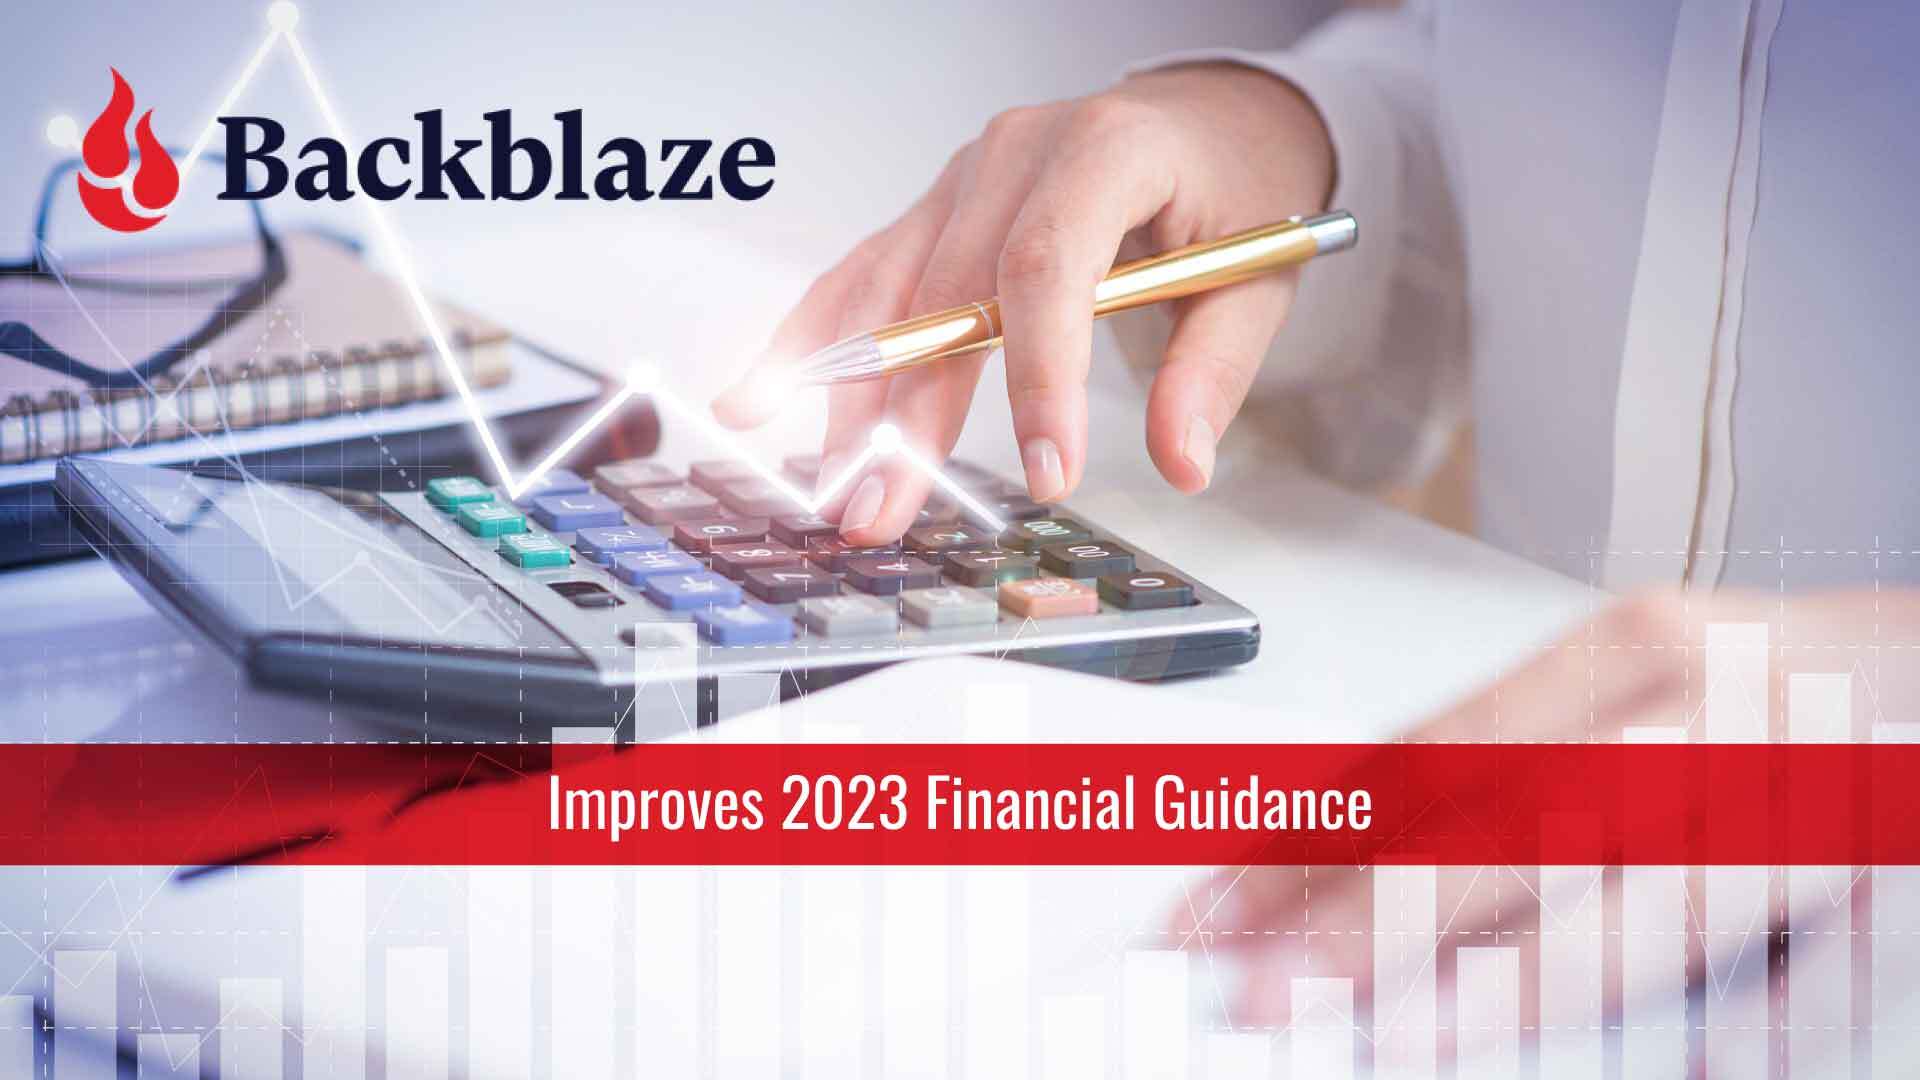 Backblaze Improves 2023 Financial Guidance